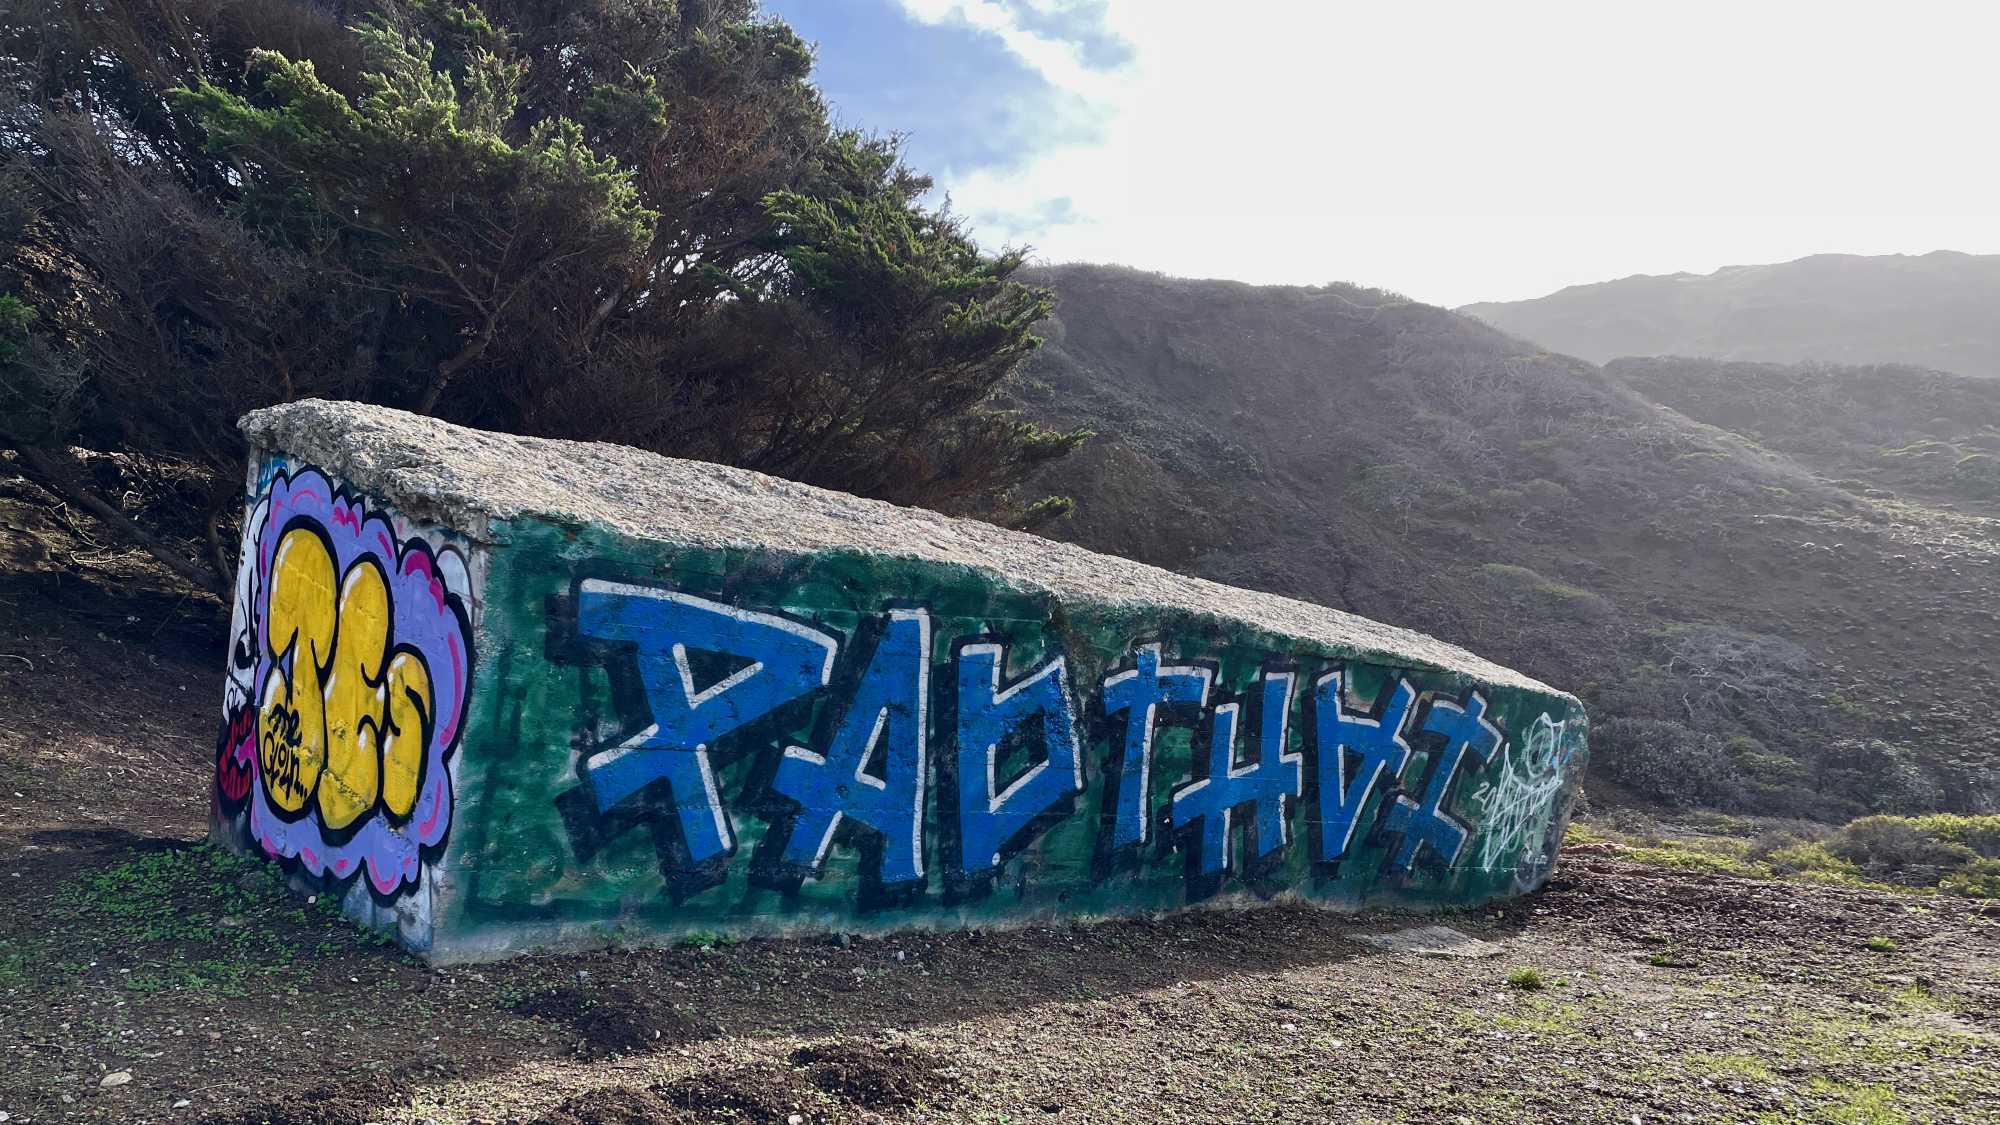 Pad Thai graffiti at Mori Point, Pacifica, California